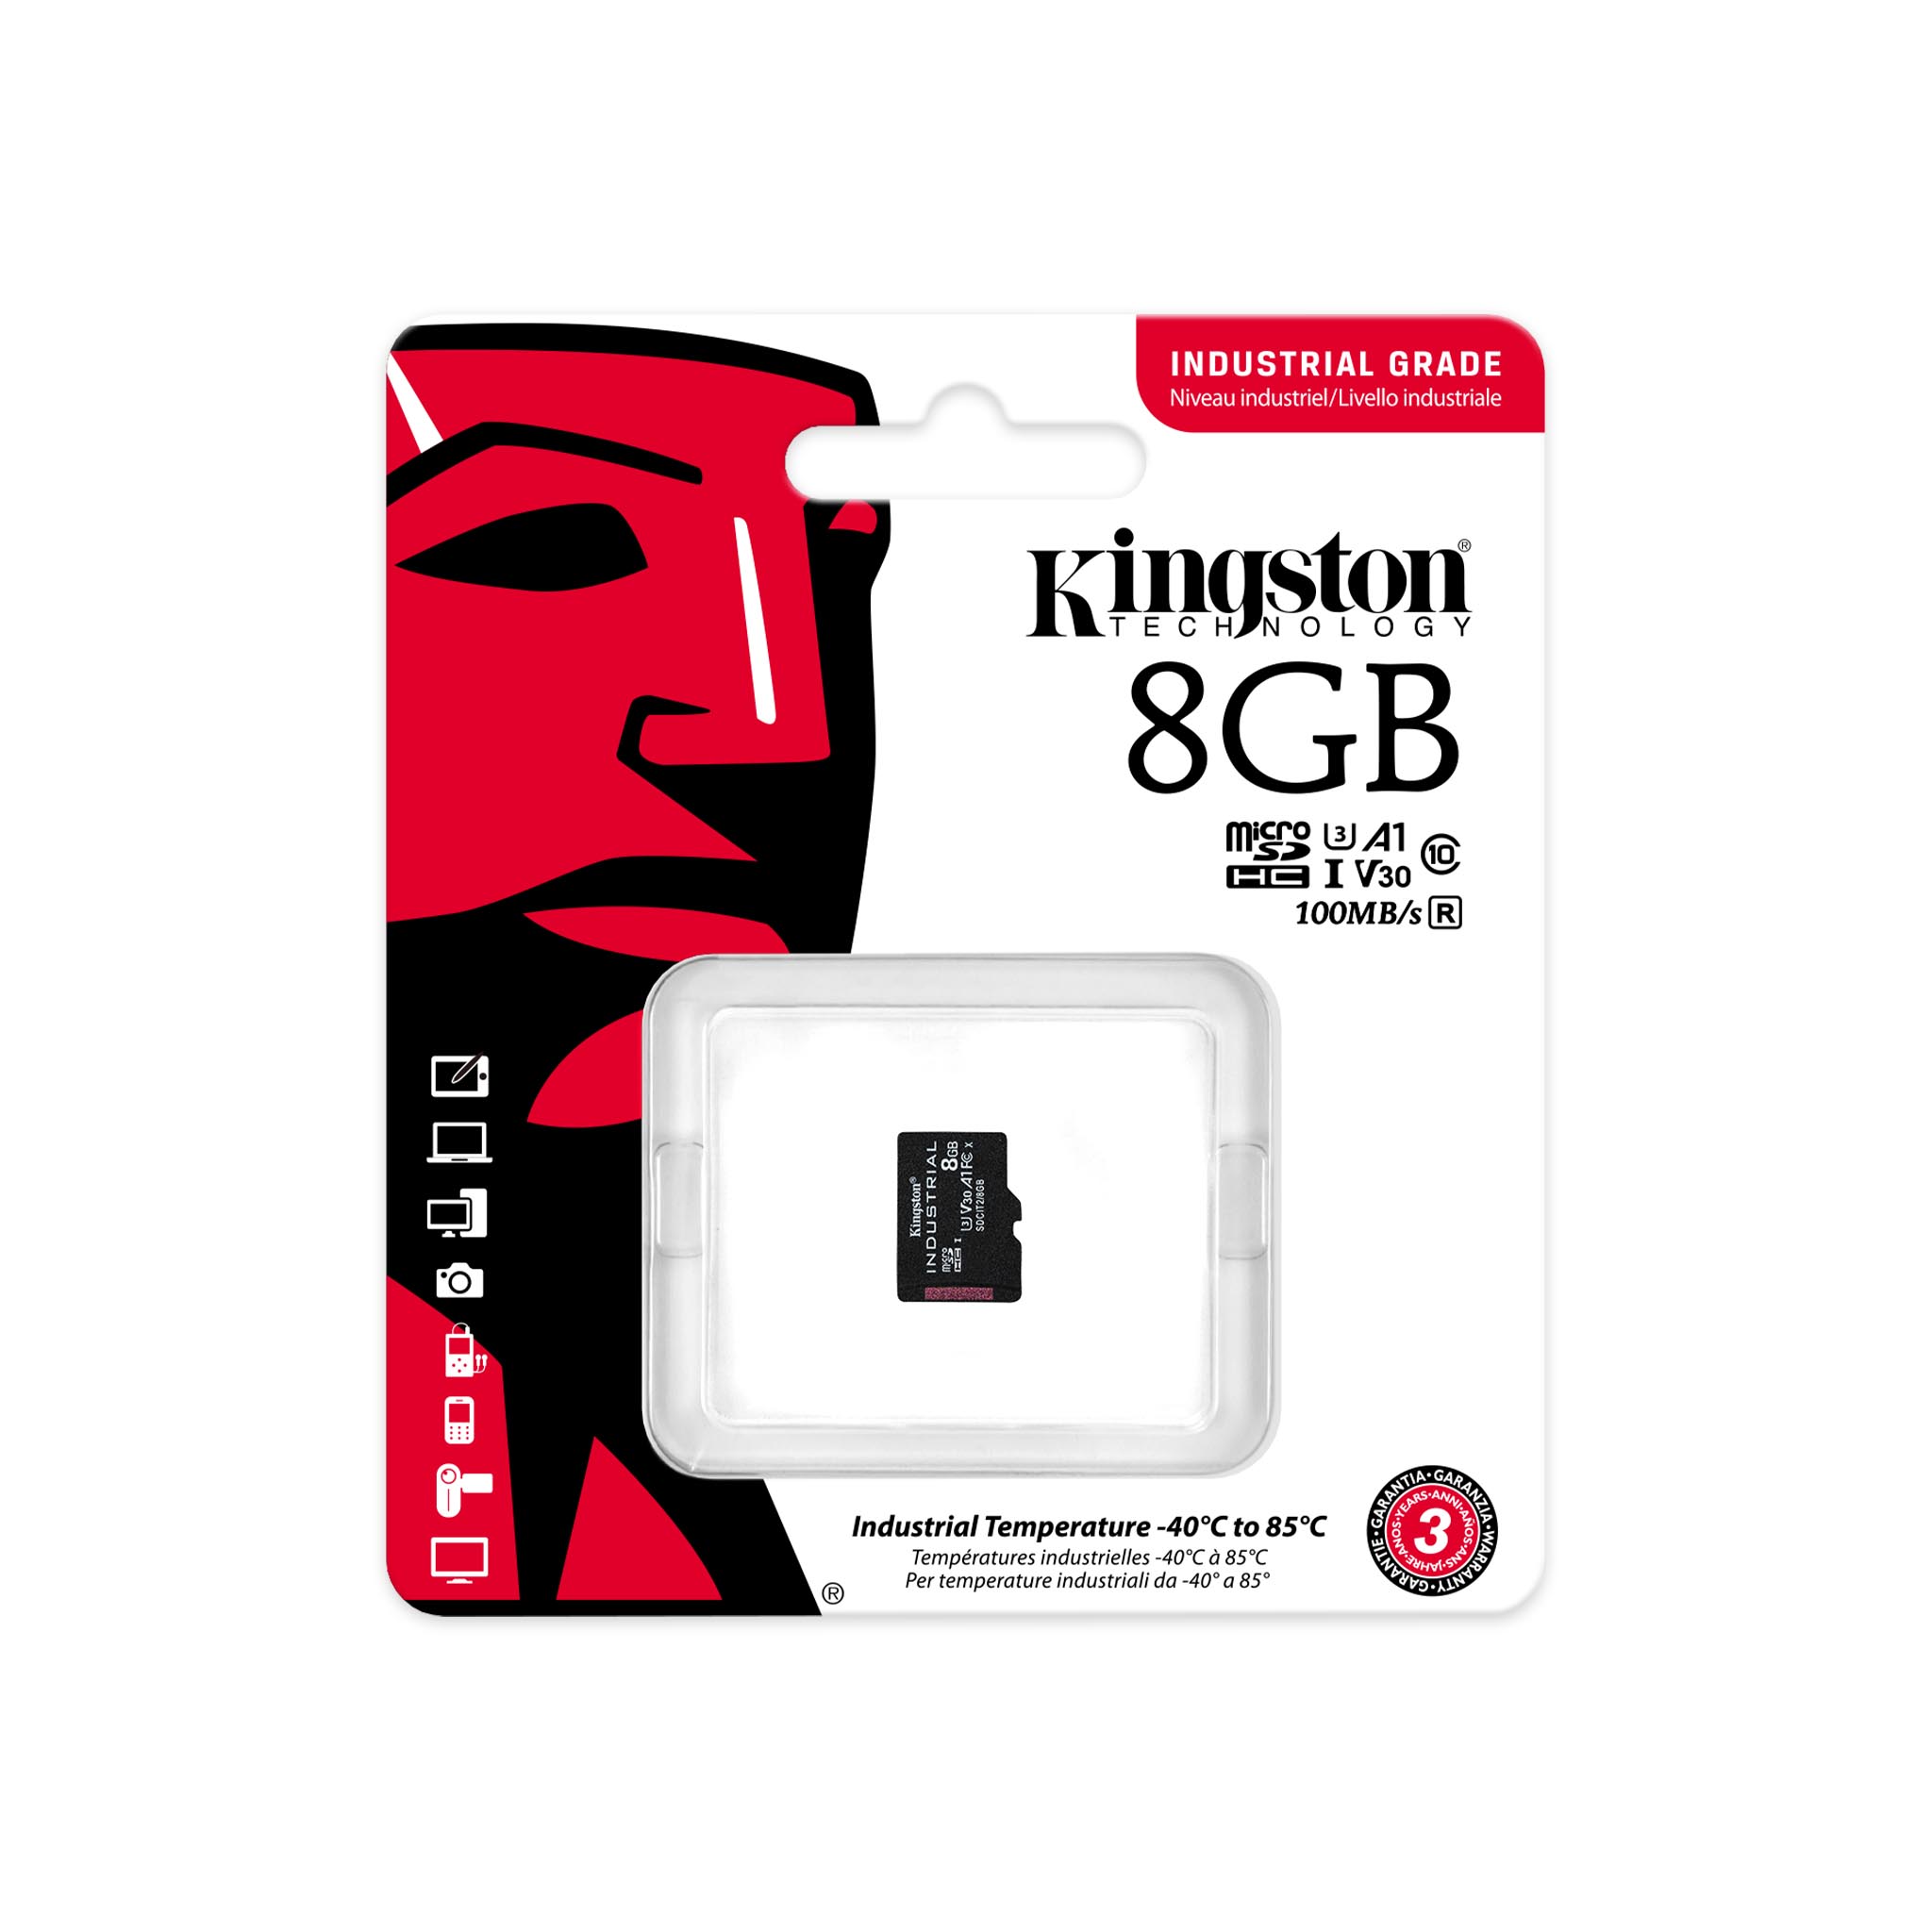 90MBs Works for Kingston Kingston Industrial Grade 8GB BLU Studio View MicroSDHC Card Verified by SanFlash. 